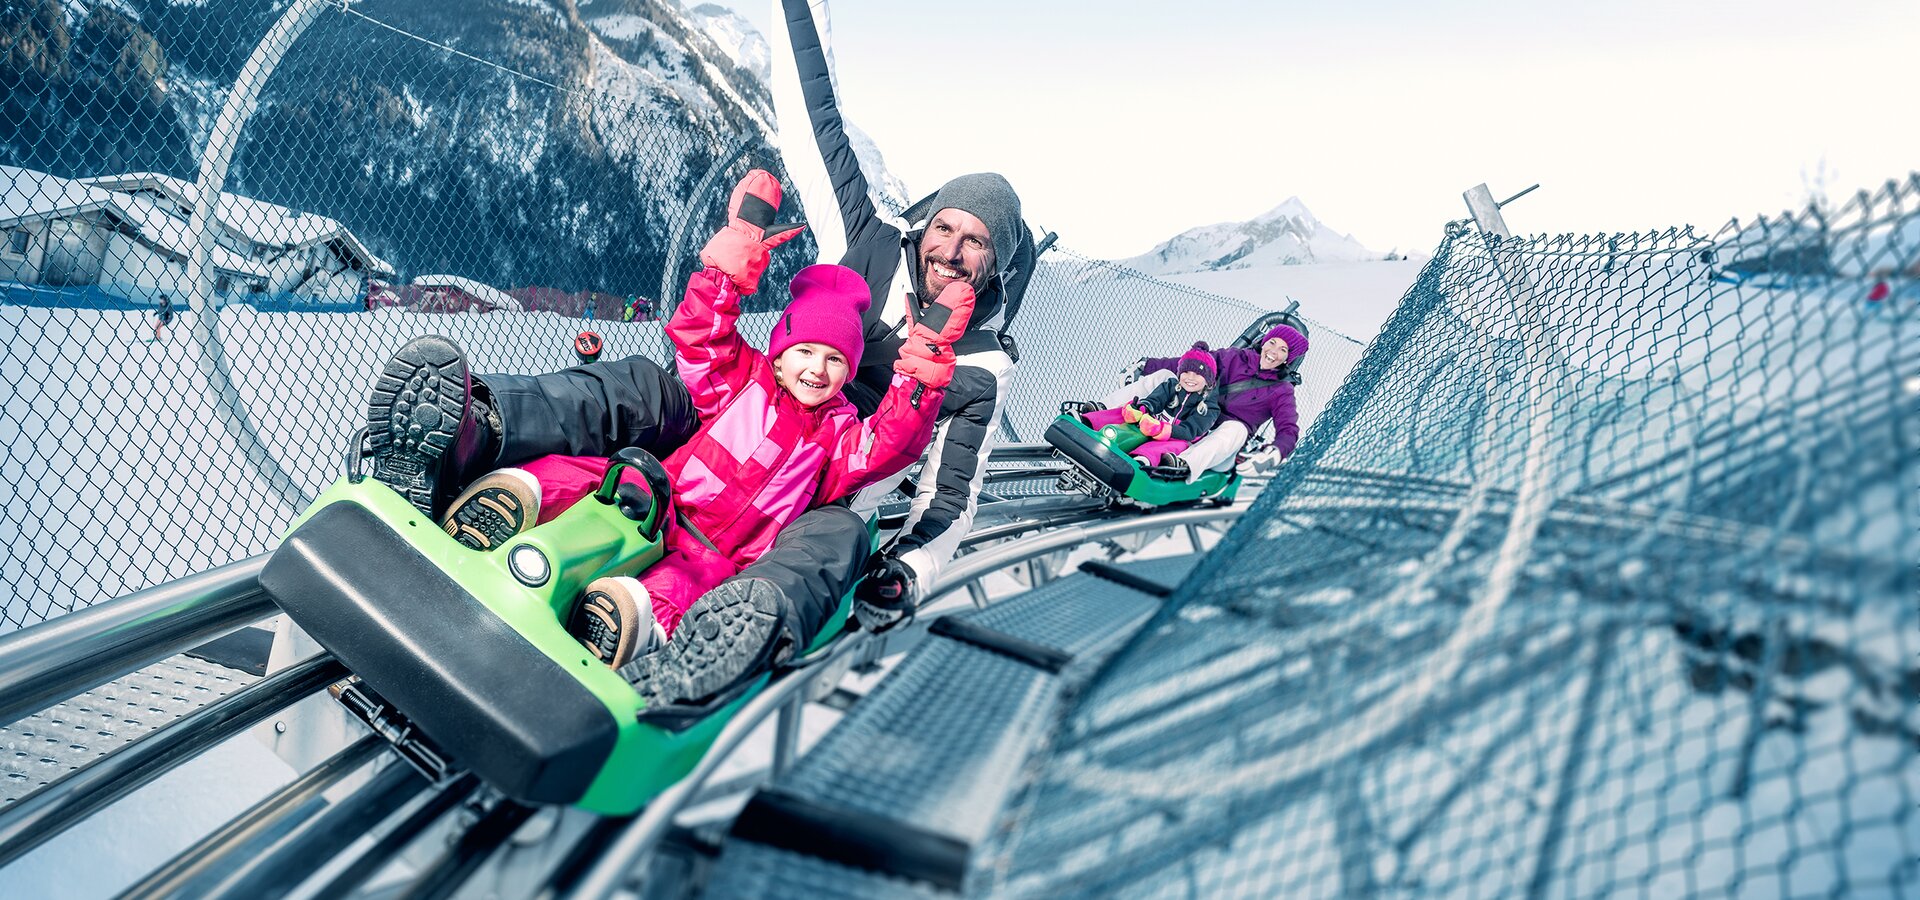 All-year tobogganing fun at the Alpine Coaster